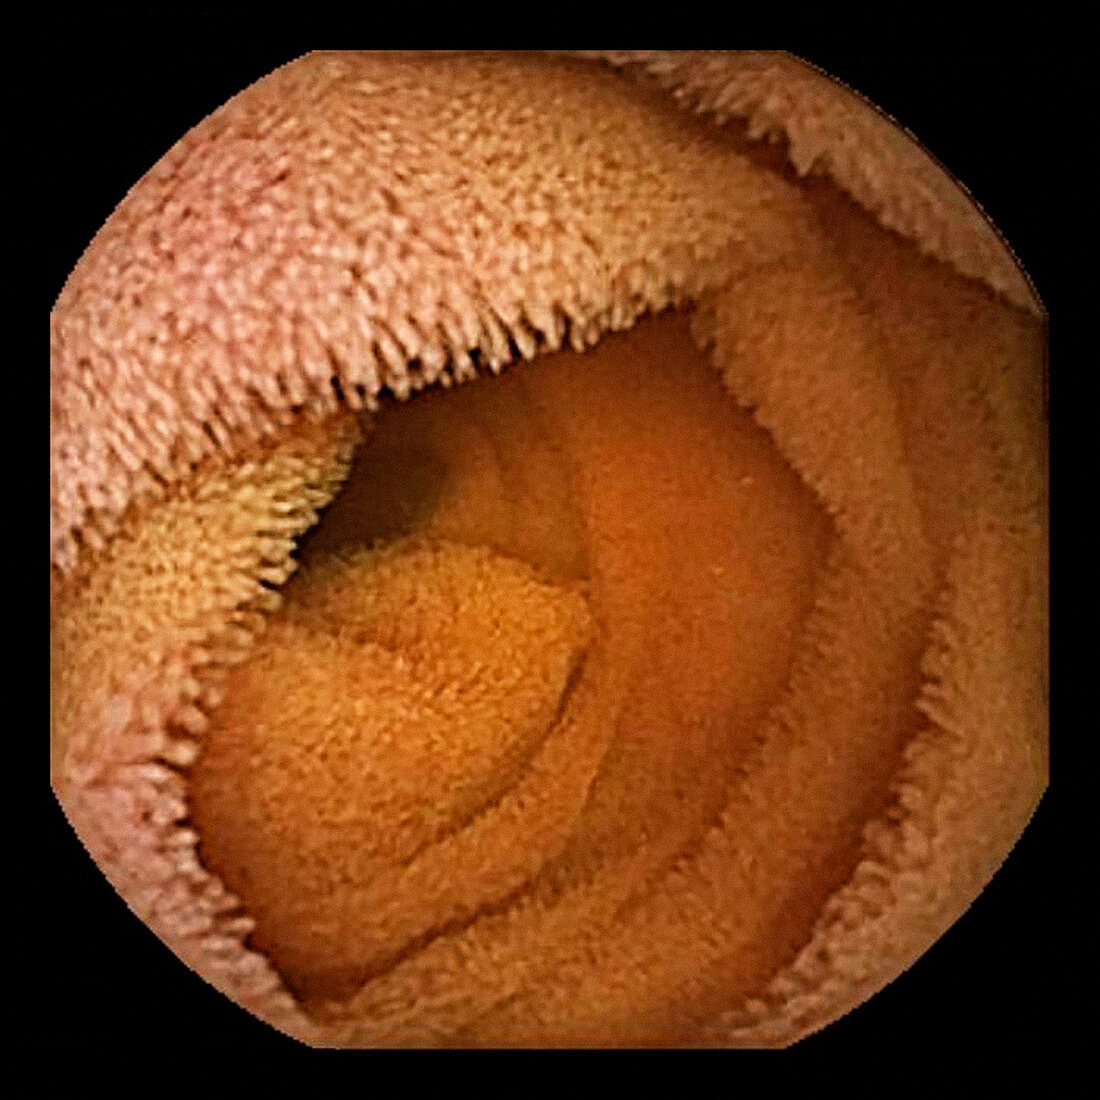 Small intestine,endoscope view